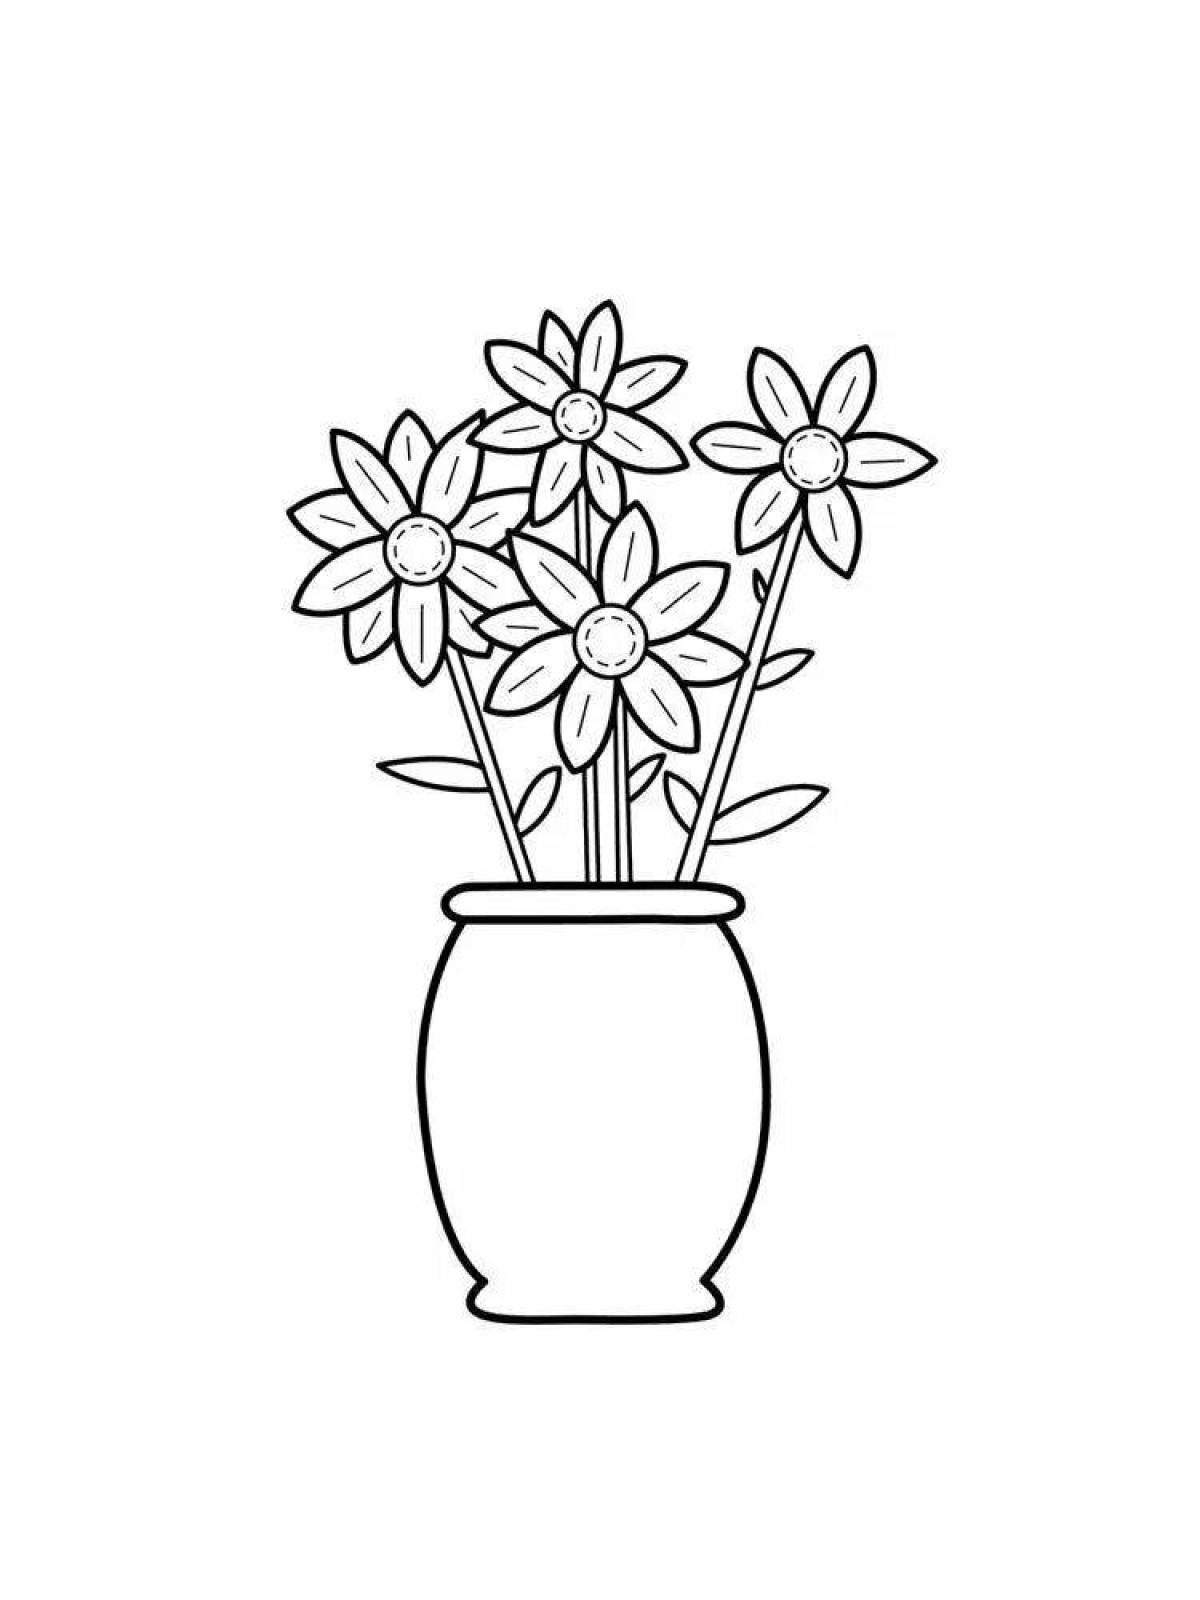 Coloring page joyful vase of flowers